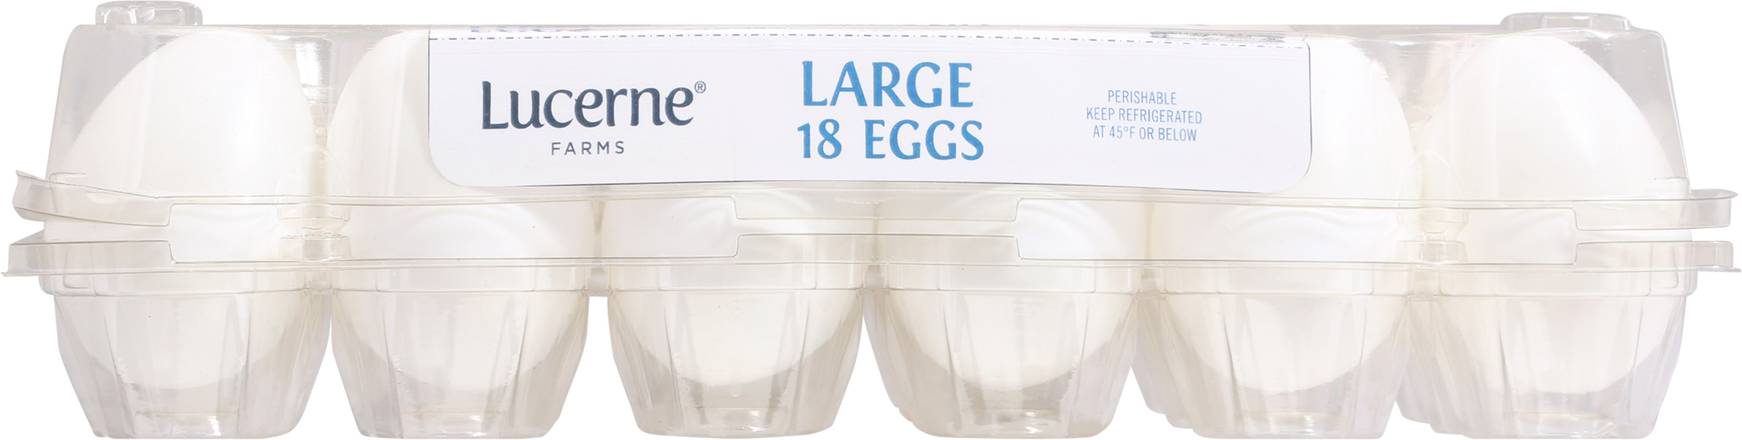 Lucerne Grade a Large Eggs (18 ct)